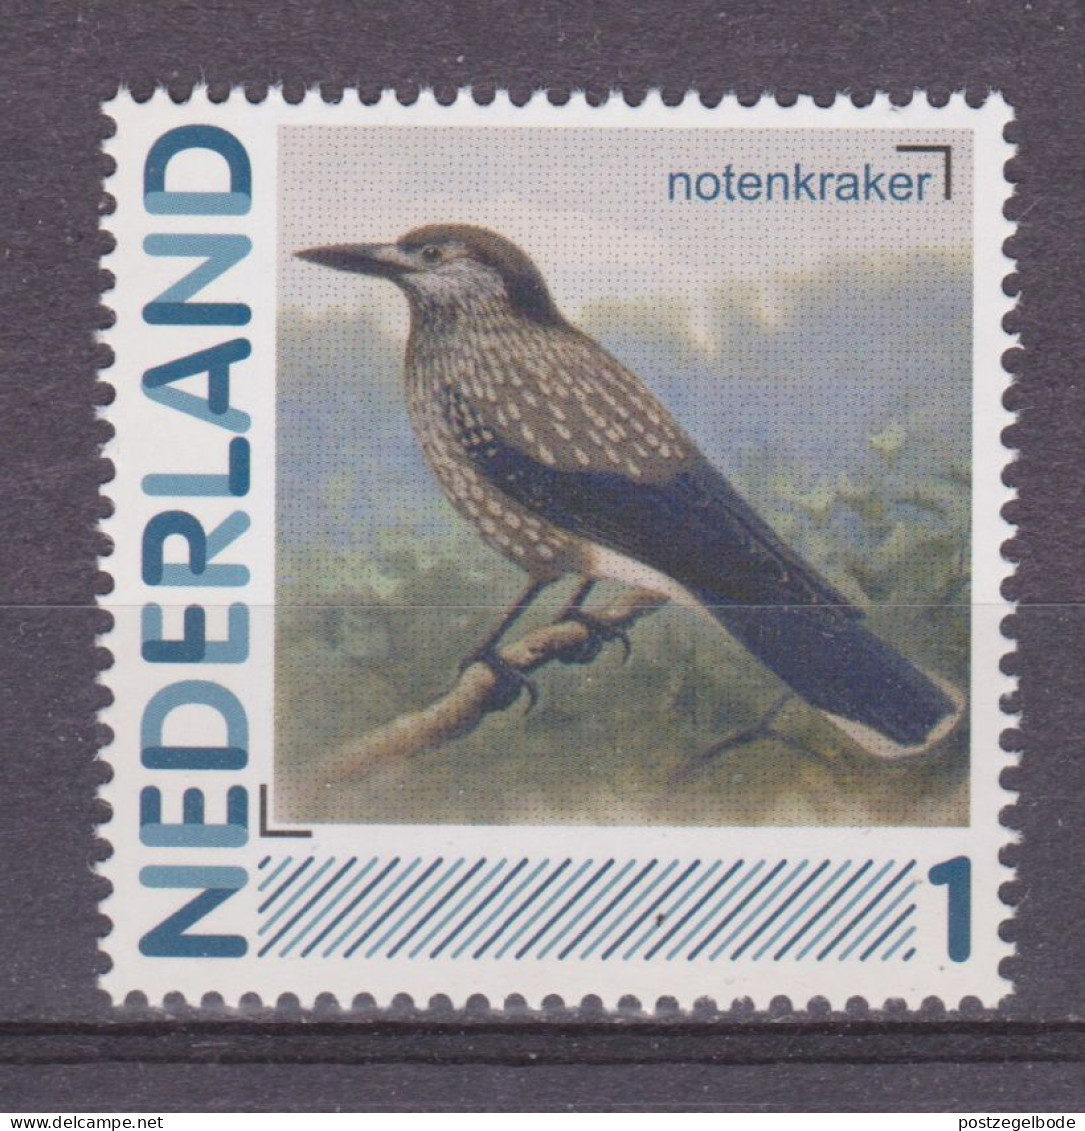 Netherlands Nederland Pays Bas Holanda Niederlande MNH ; Notenkraker Vogel Ave Bird Oiseau - Cuculi, Turaco